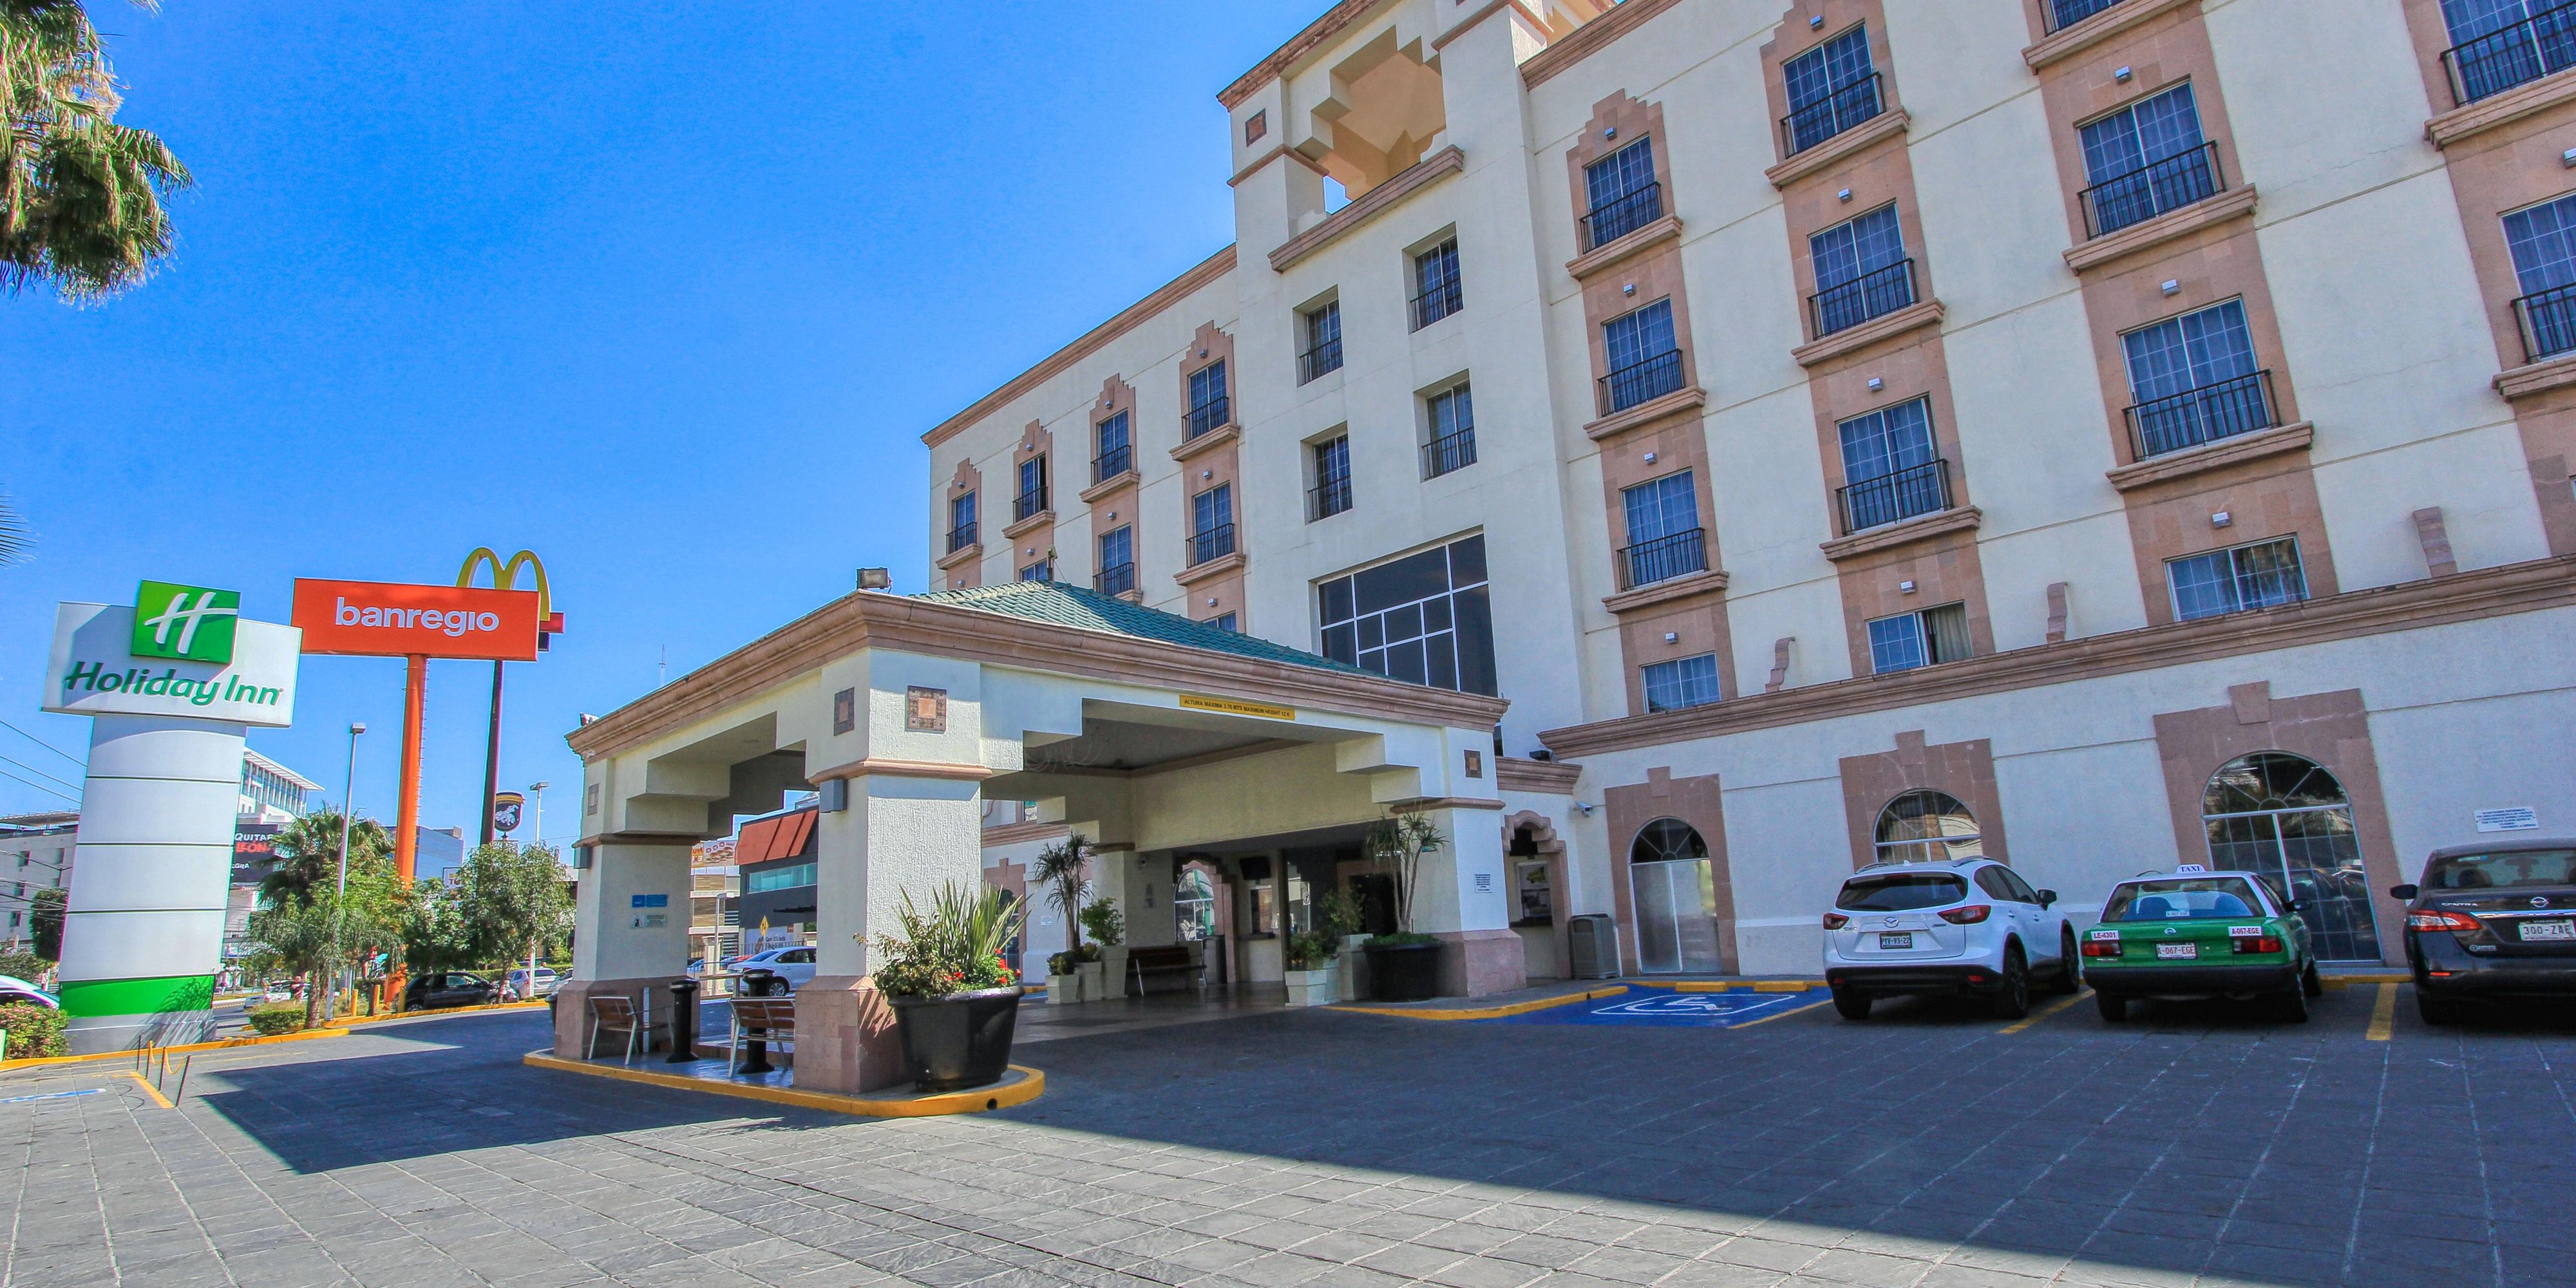 Hotels in Leon, Guanajuato Near the Stadium Leon | Holiday Inn Leon